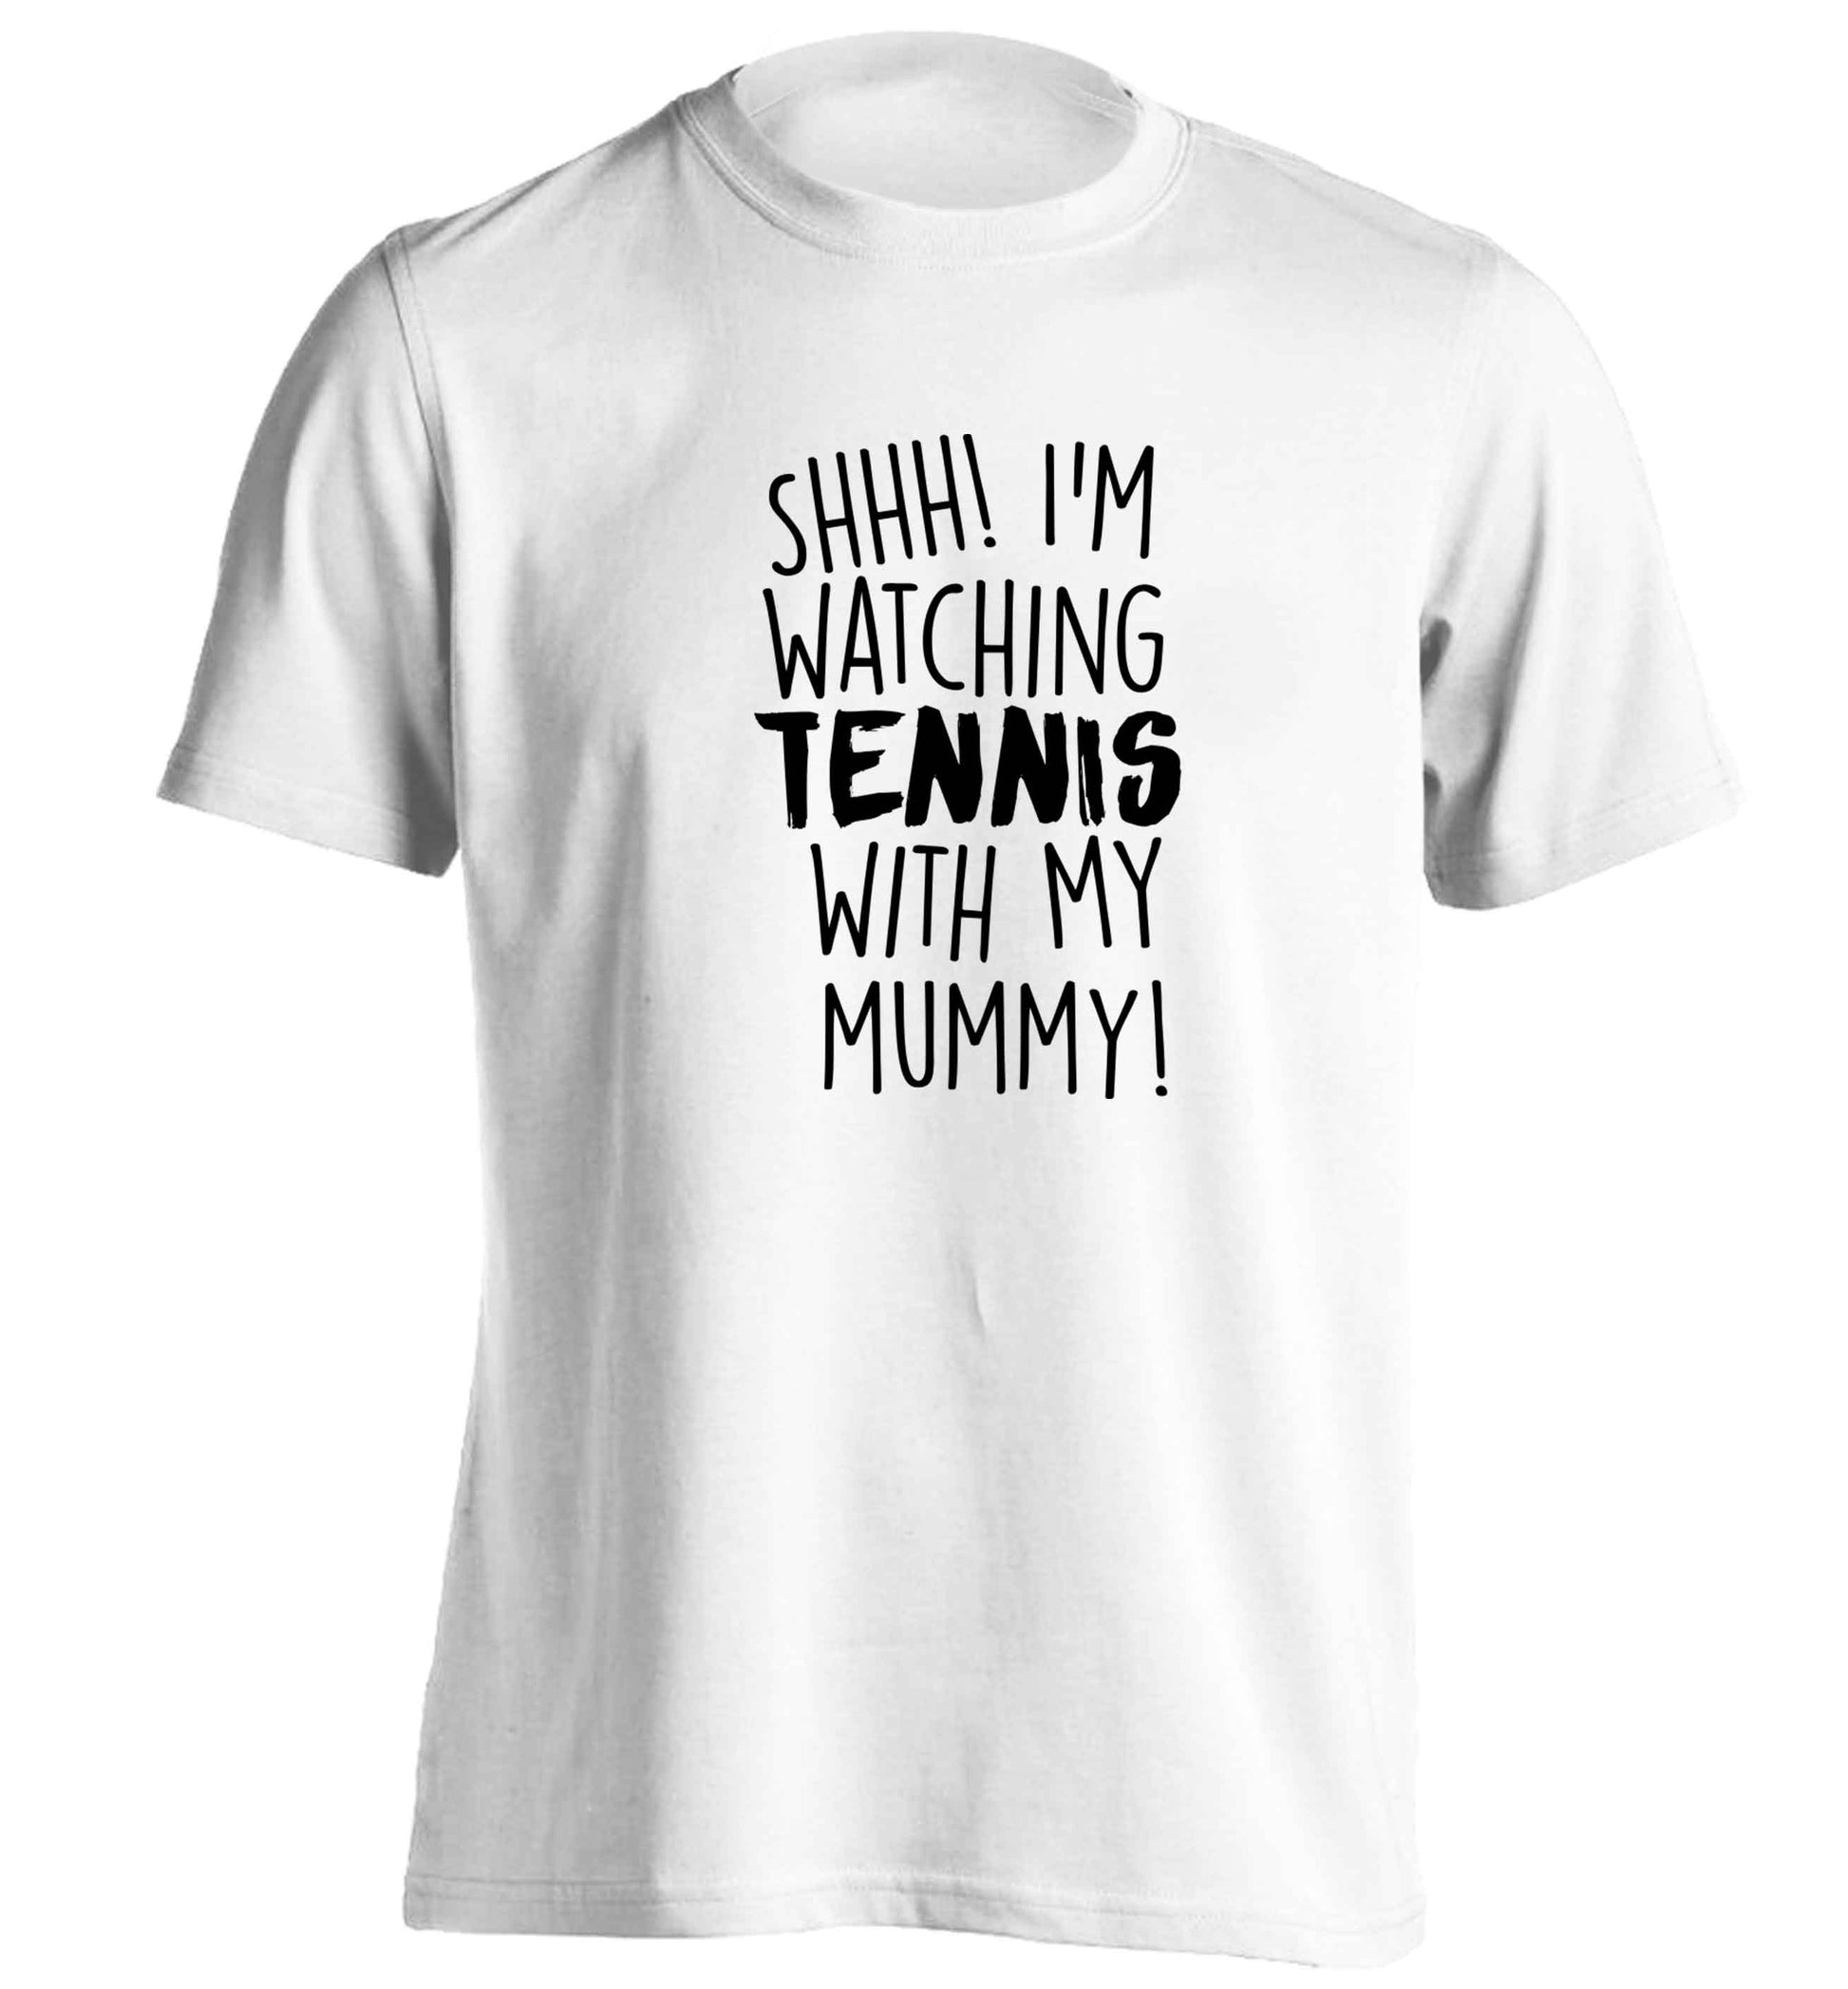 Shh! I'm watching tennis with my mummy! adults unisex white Tshirt 2XL